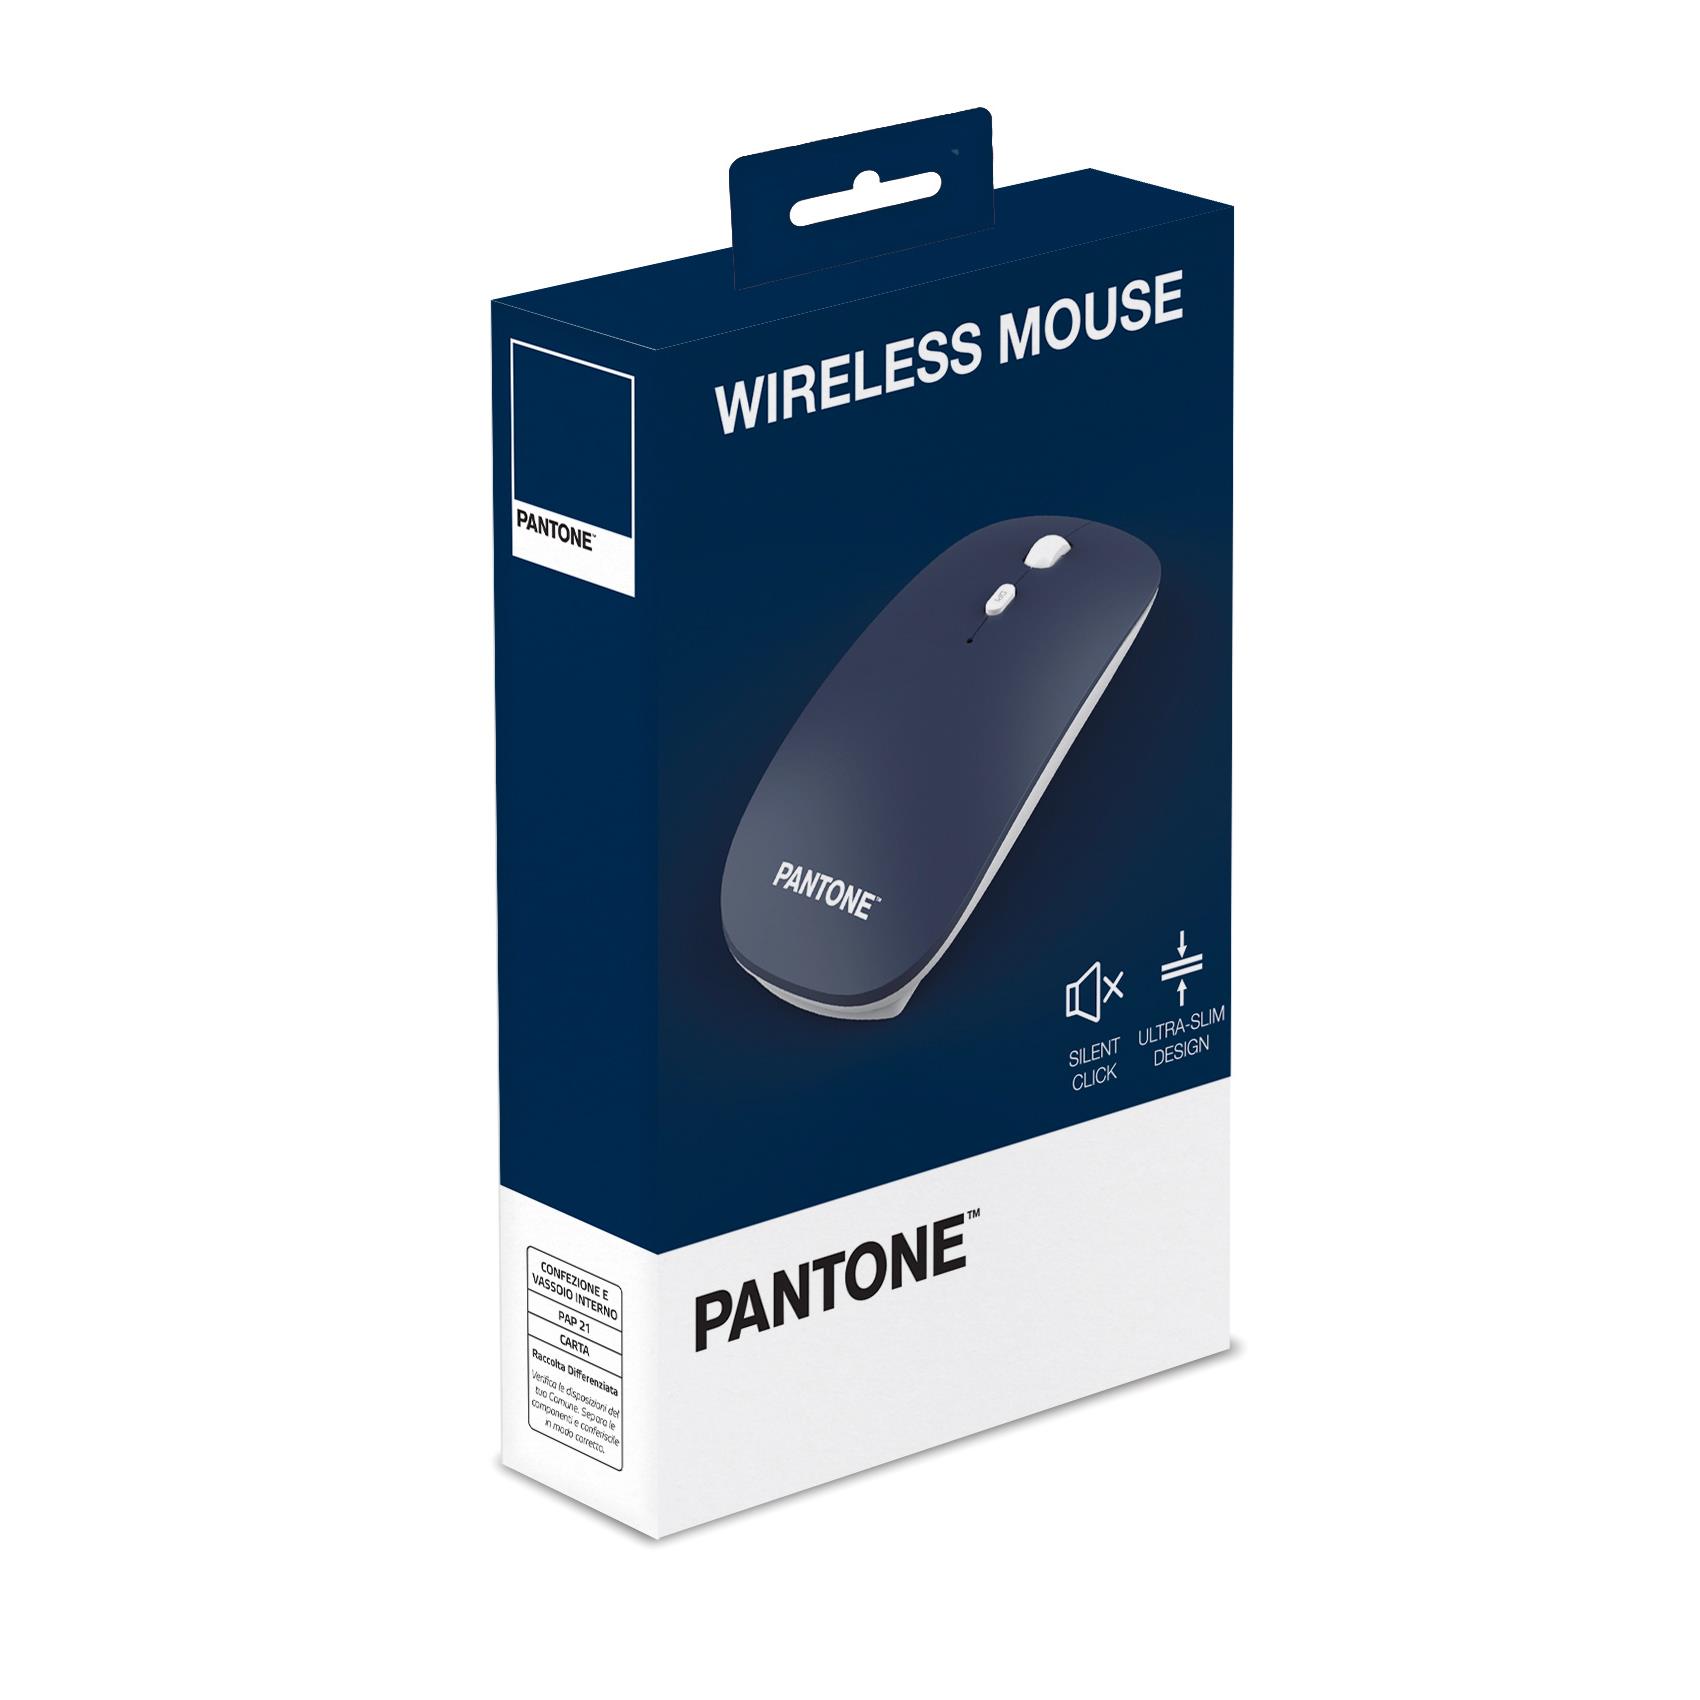 Wireless Mouse Navy1 Pantone Pt Kb09mn 4713213365380